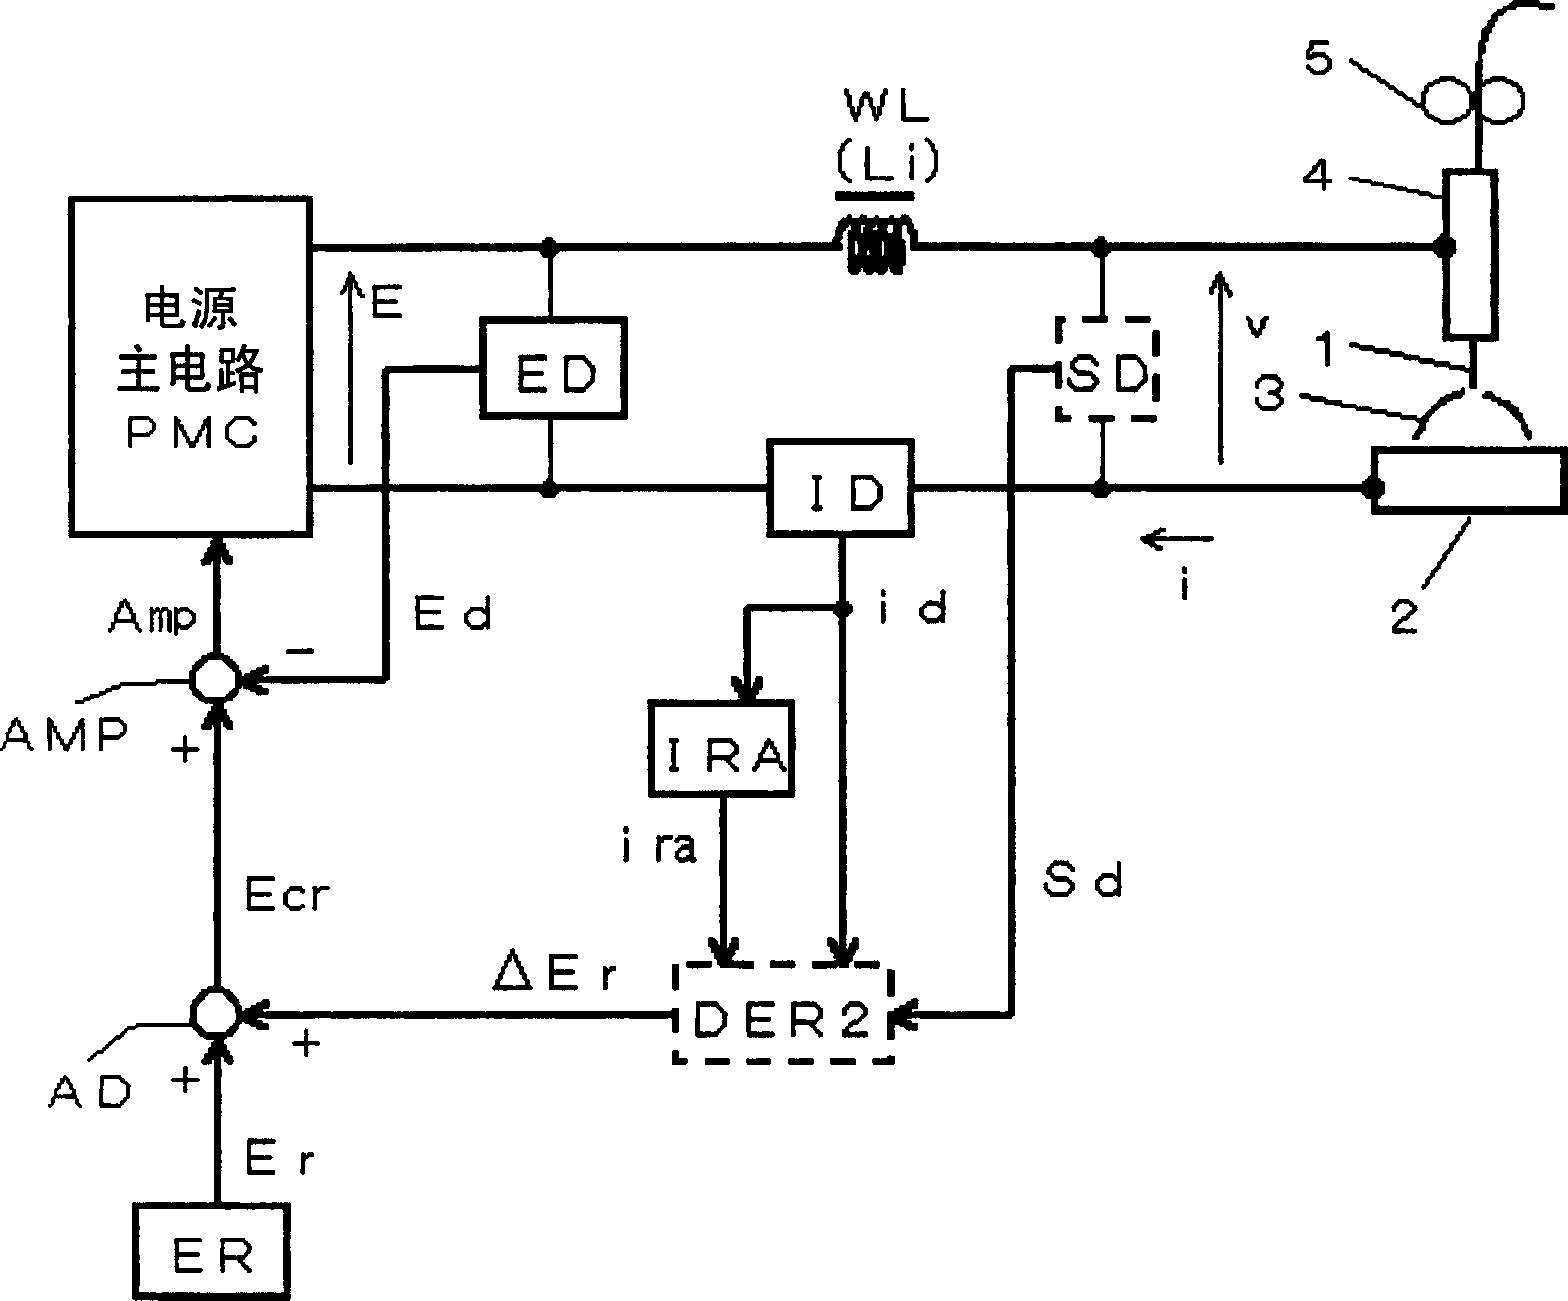 Welding power output control method